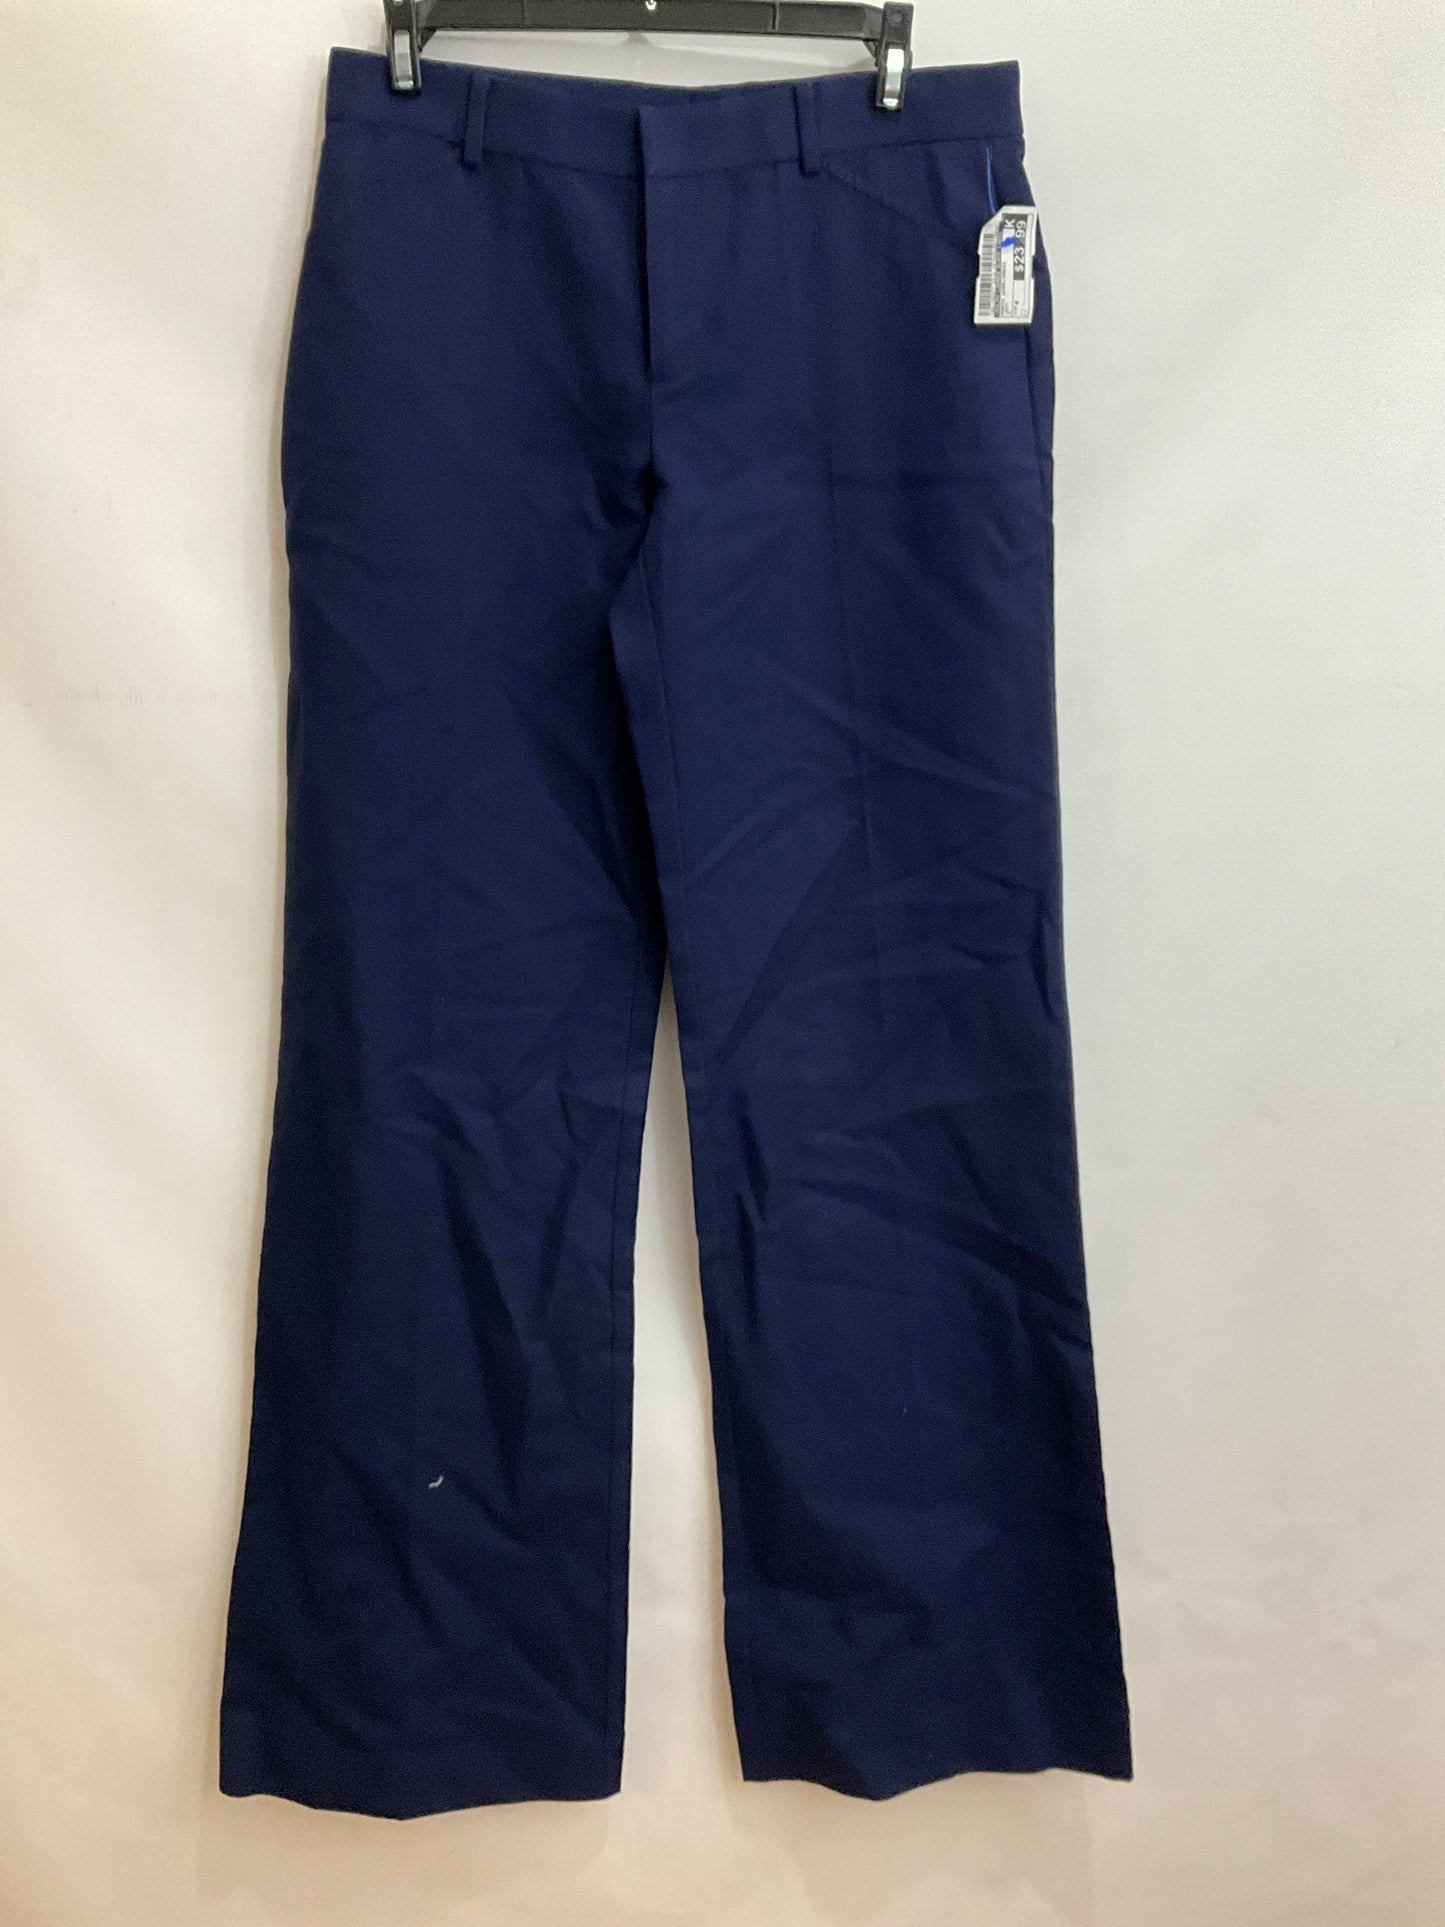 Navy Pants Work/dress Ralph Lauren Black Label, Size 4